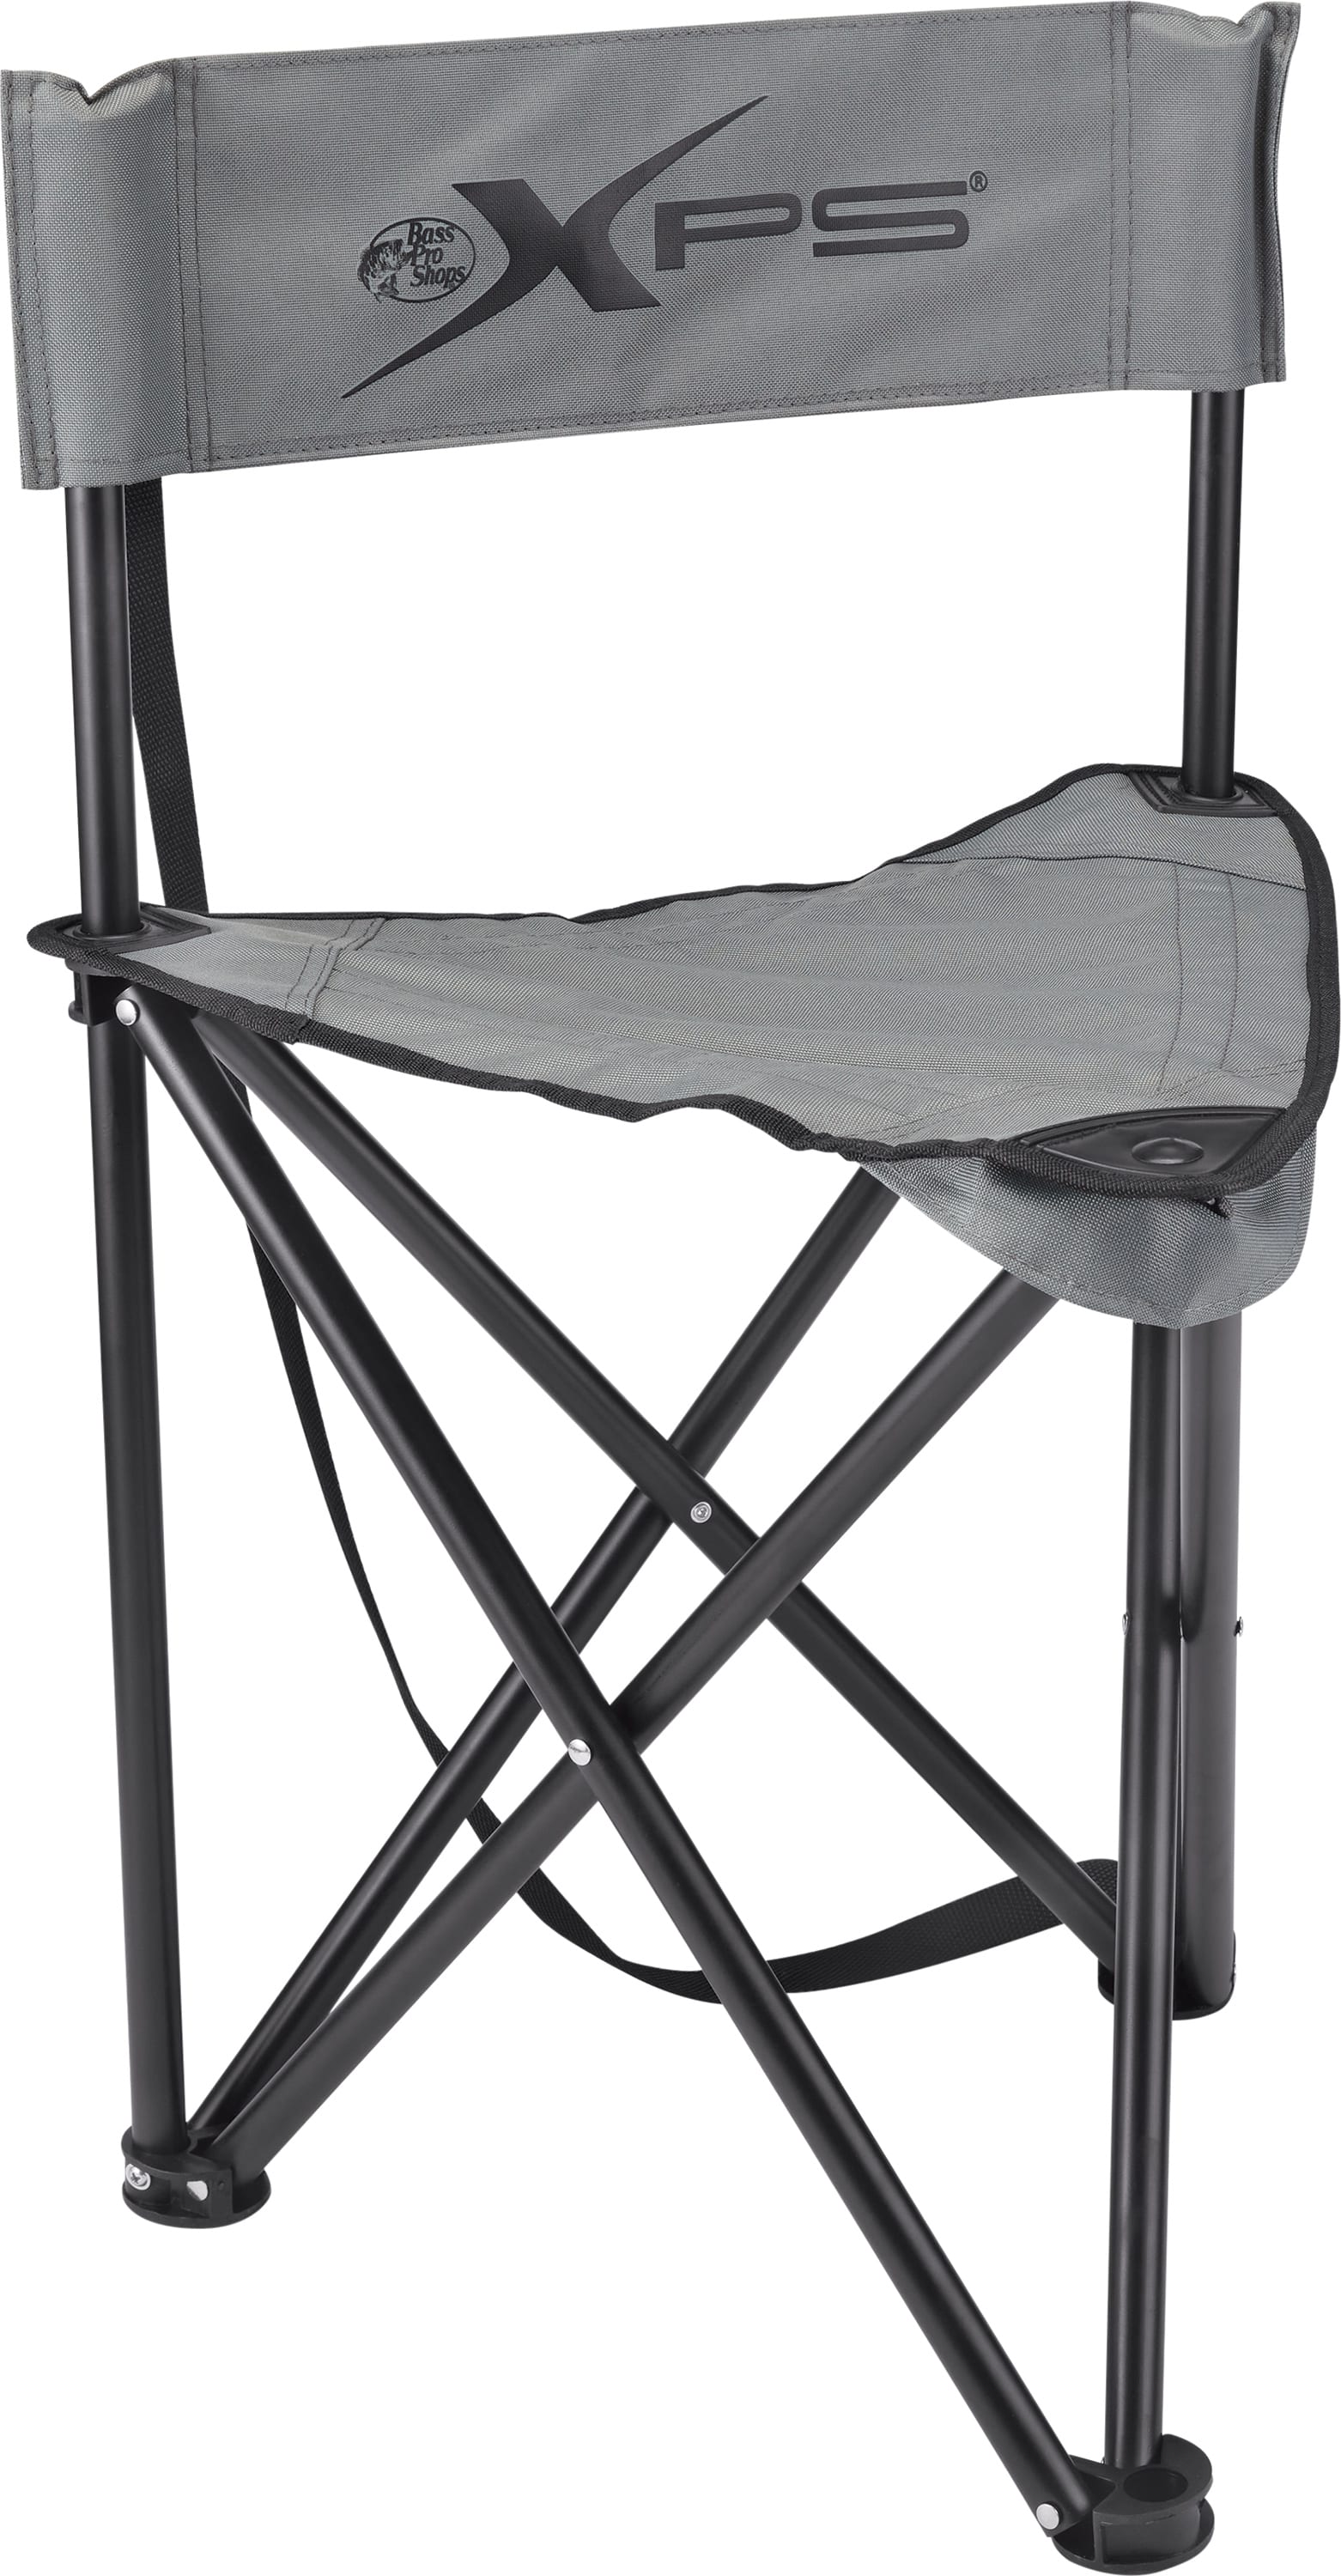 XPS® Folding Ice Fishing Chair